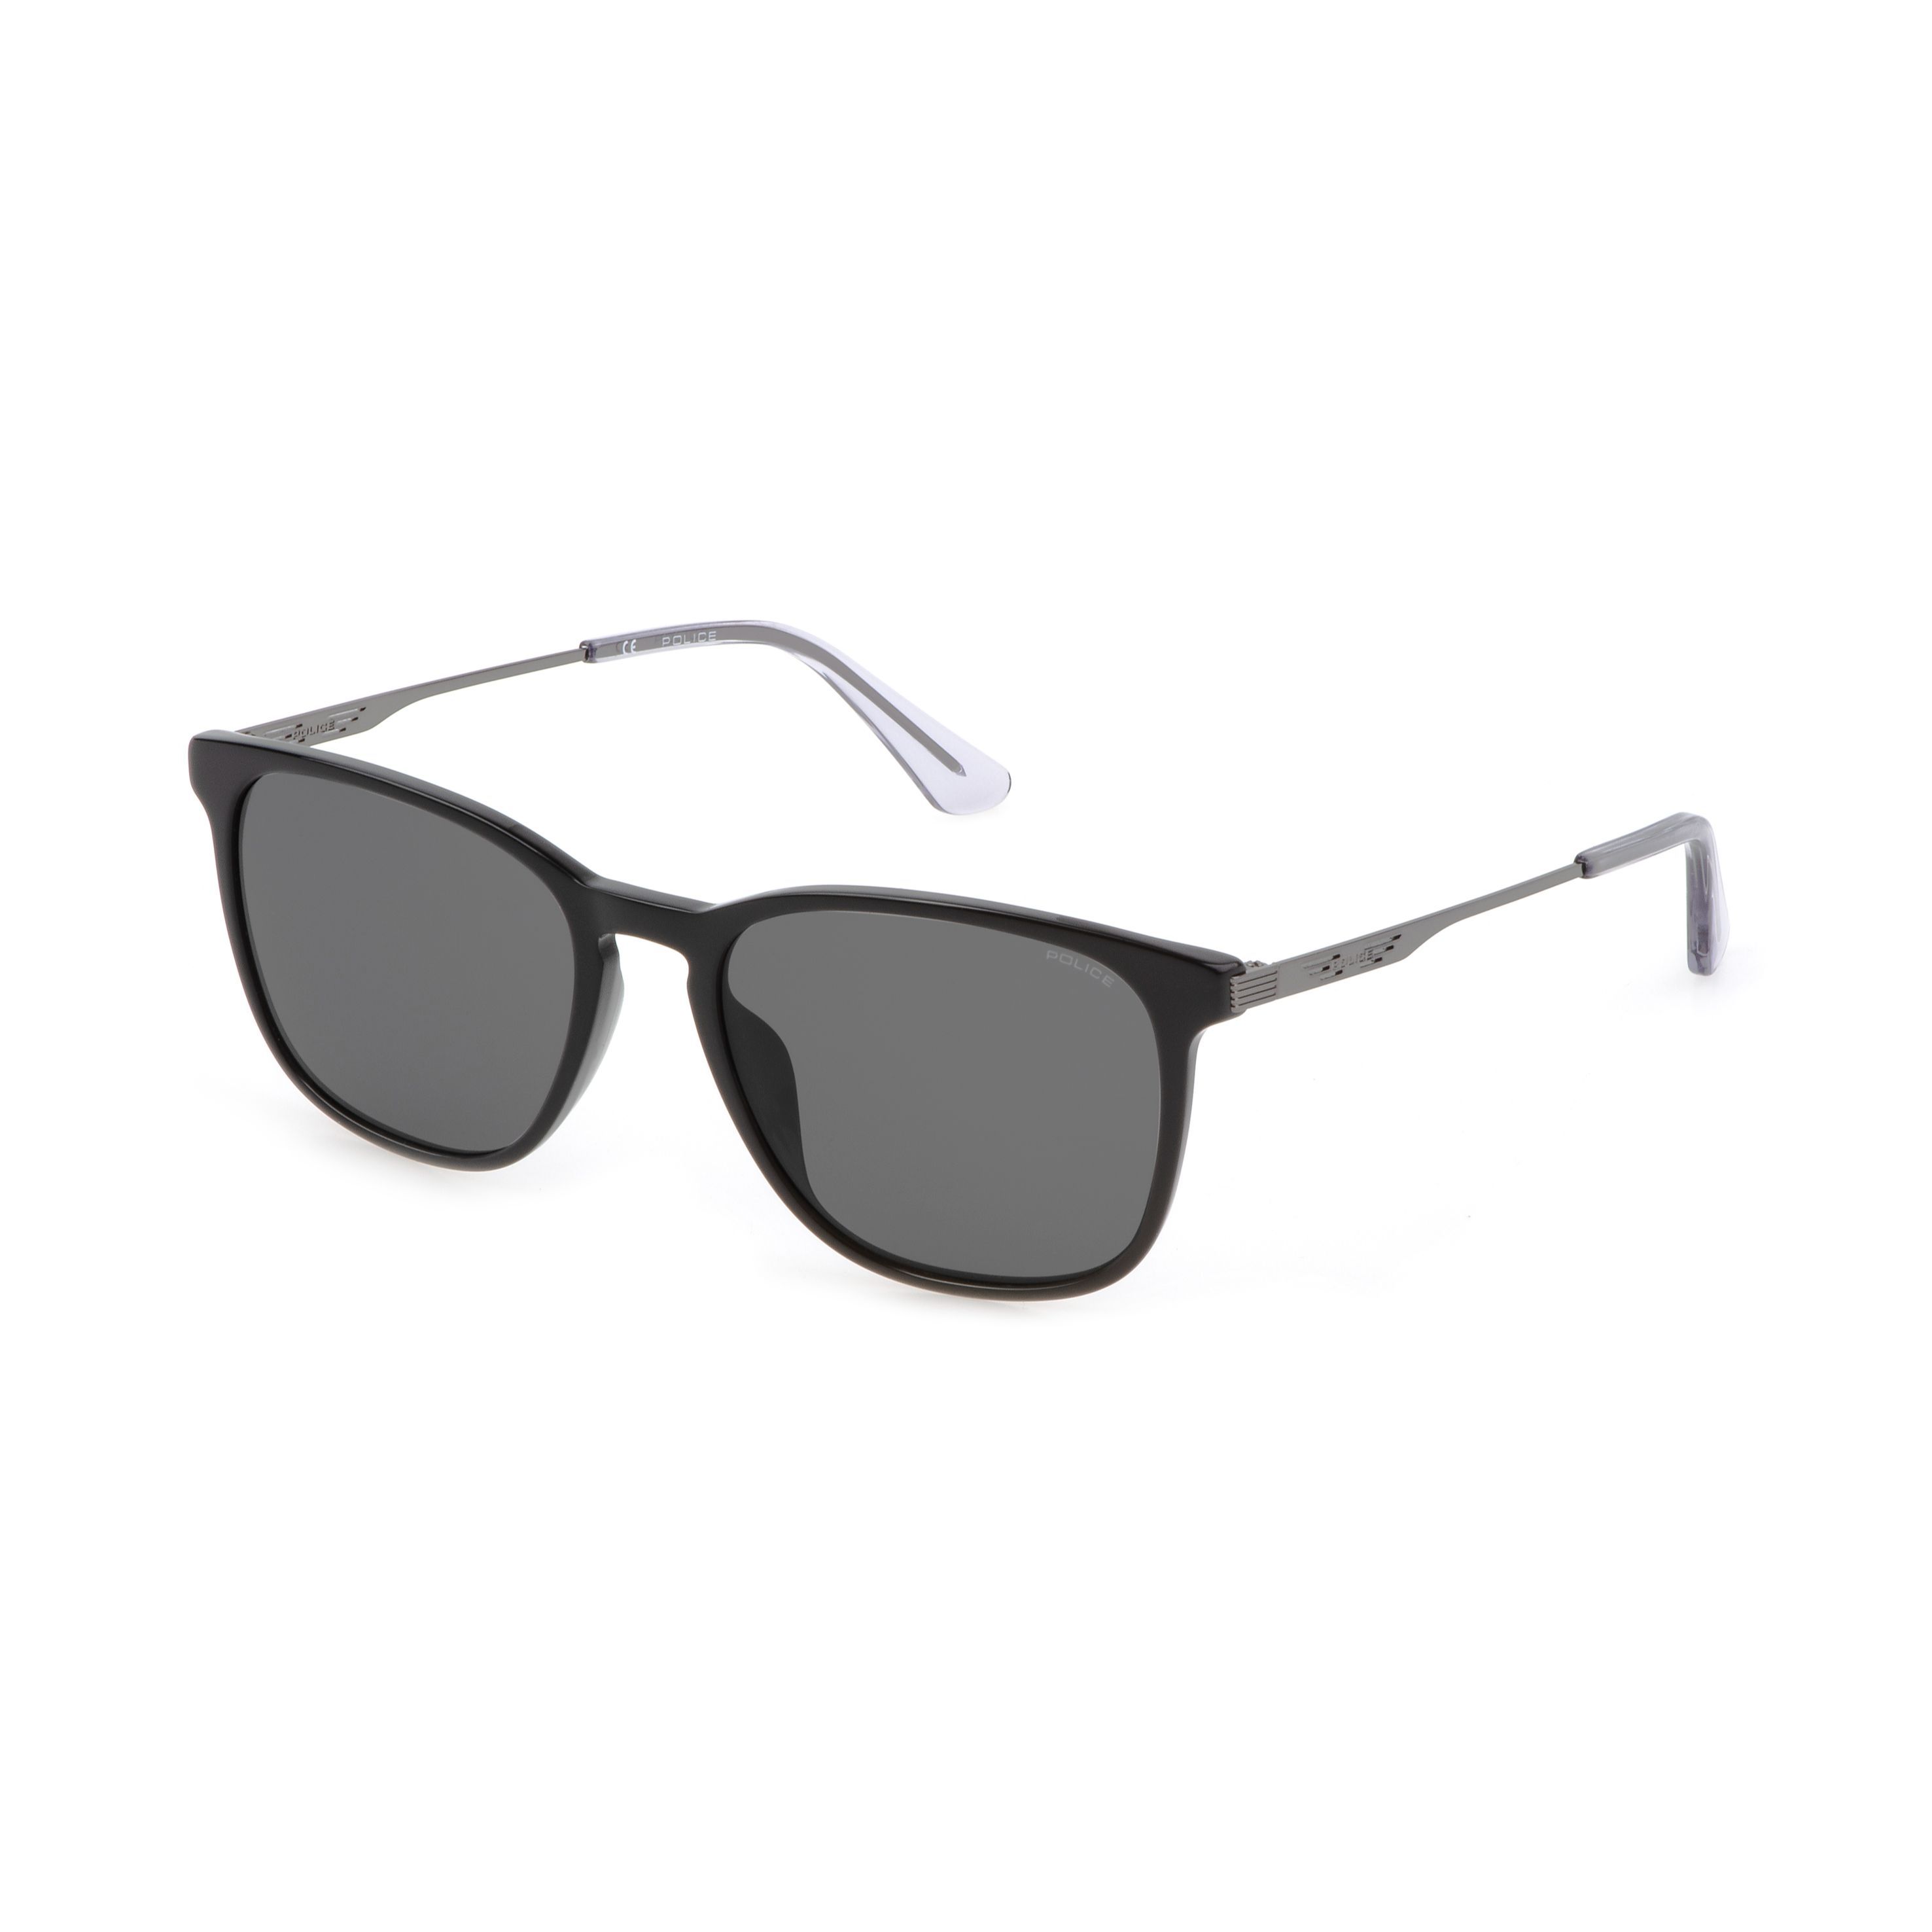 SPLD47M Square Sunglasses 700 - size 55